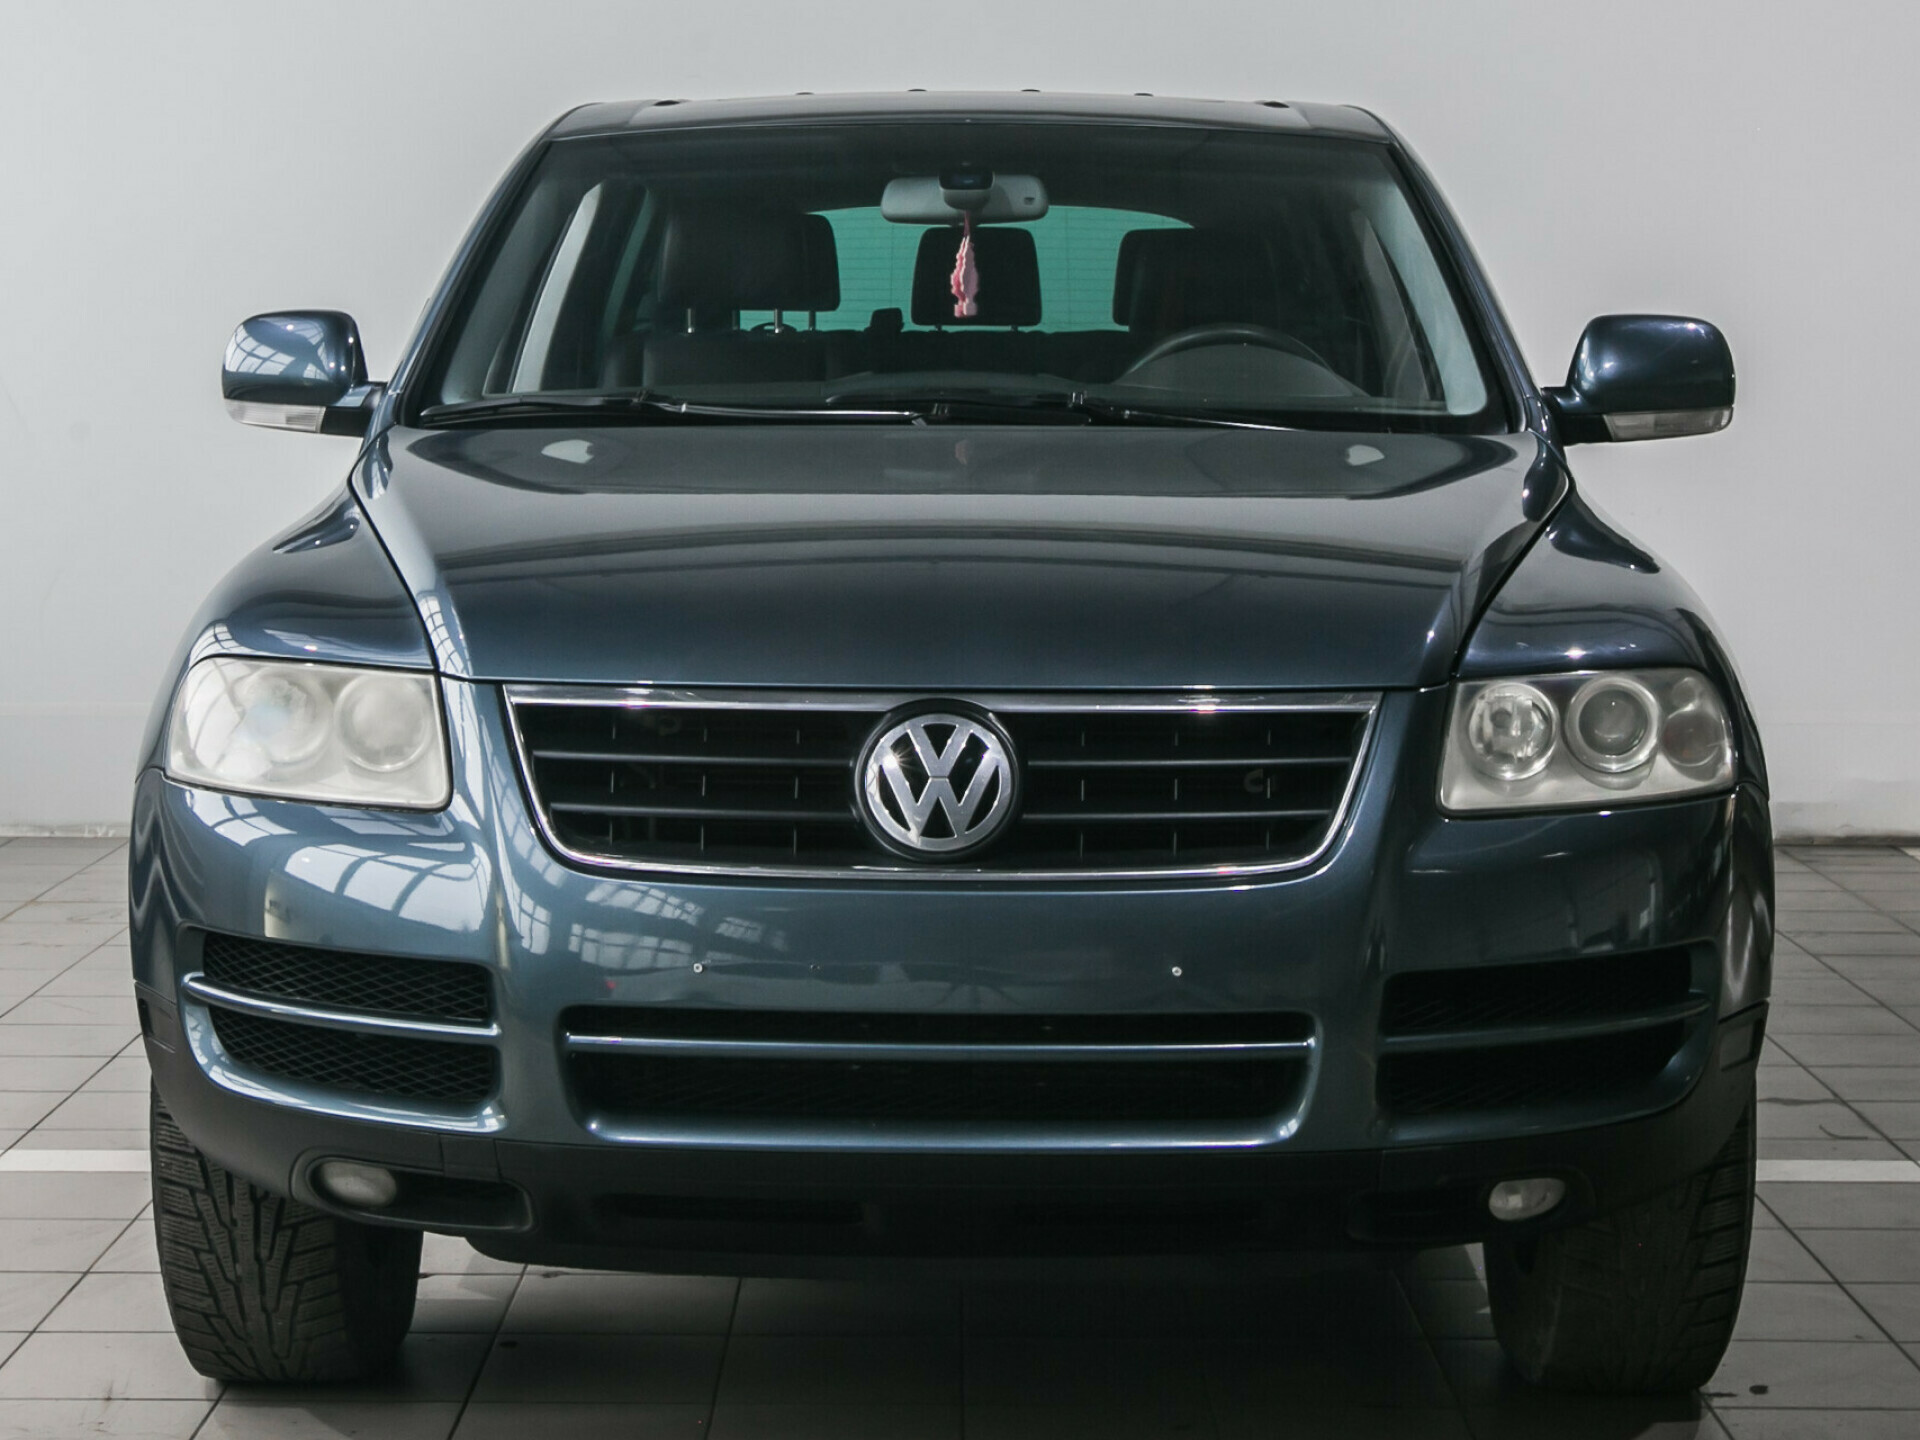 Volkswagen touareg 2006